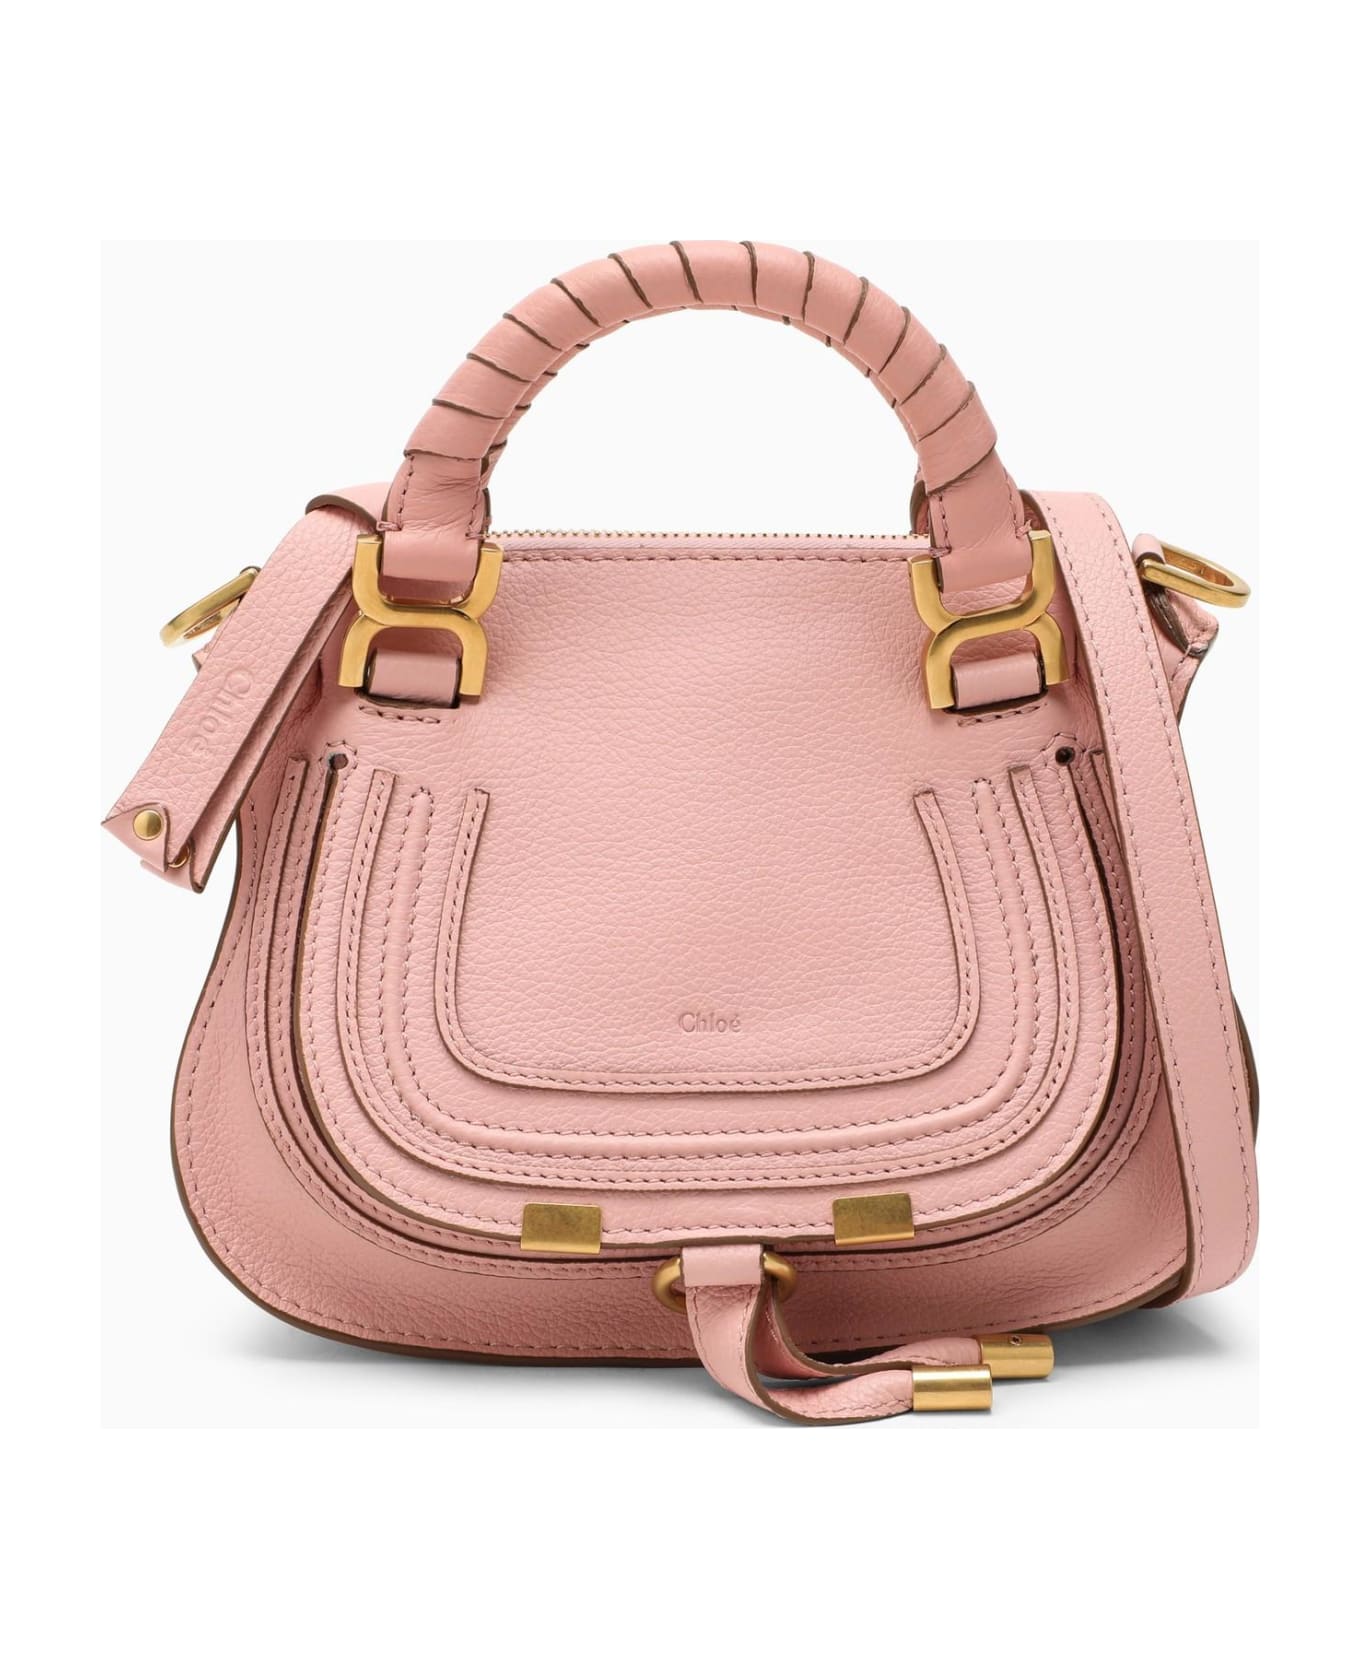 Chloé Marcie Handbag - rose-pink